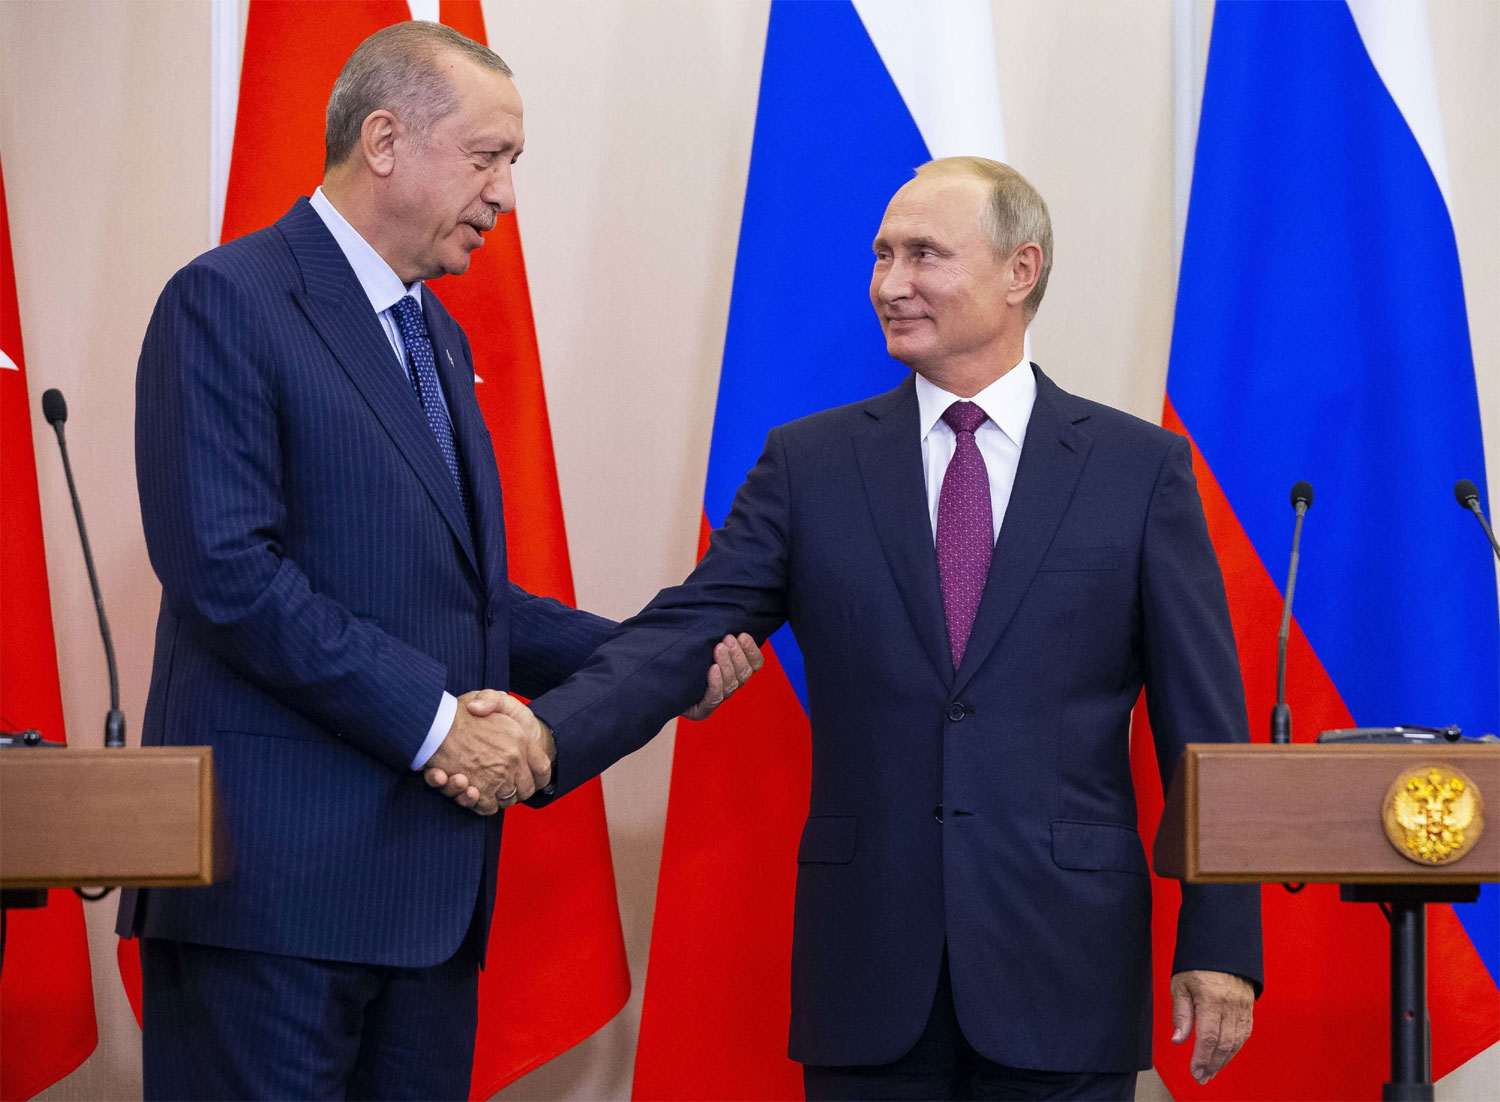 Russian President Vladimir Putin, right, and Turkish President Recep Tayyip Erdogan